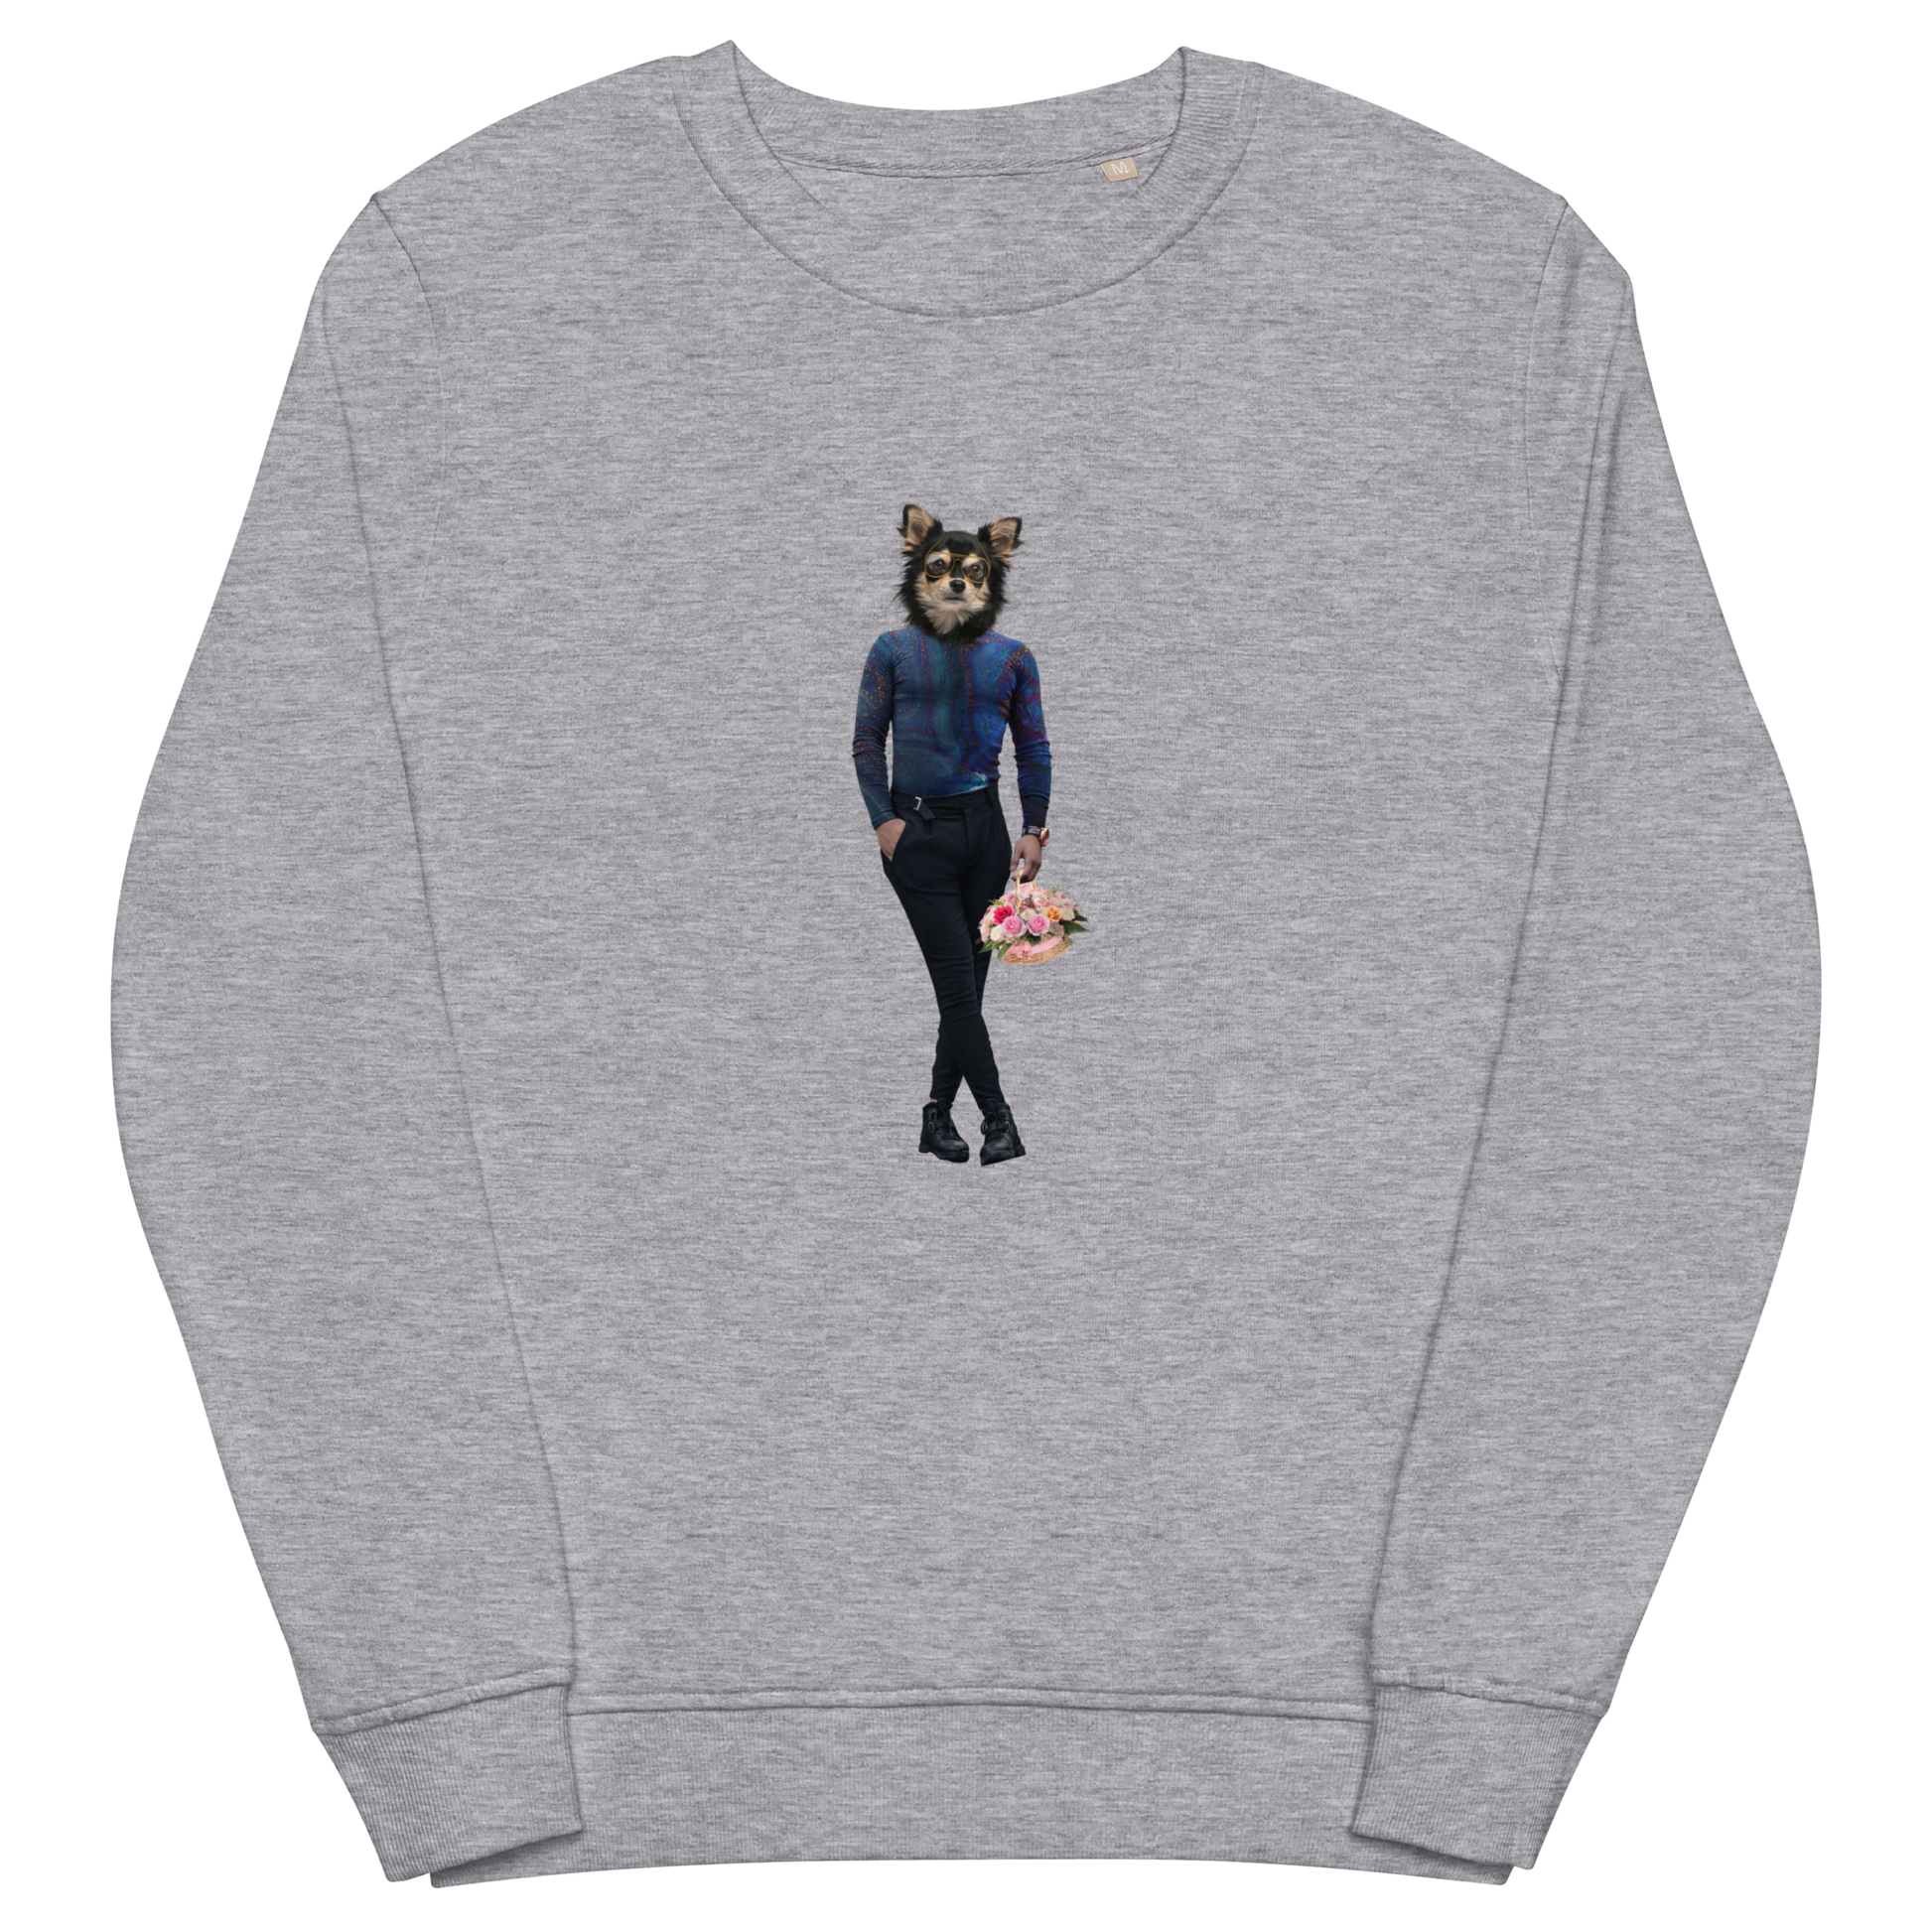 Grey Melange Organic Cotton Dog Sweatshirt showcasing a captivating Anthropomorphic Dog graphic on the chest - Cool Graphic Dog Sweatshirts - Boozy Fox